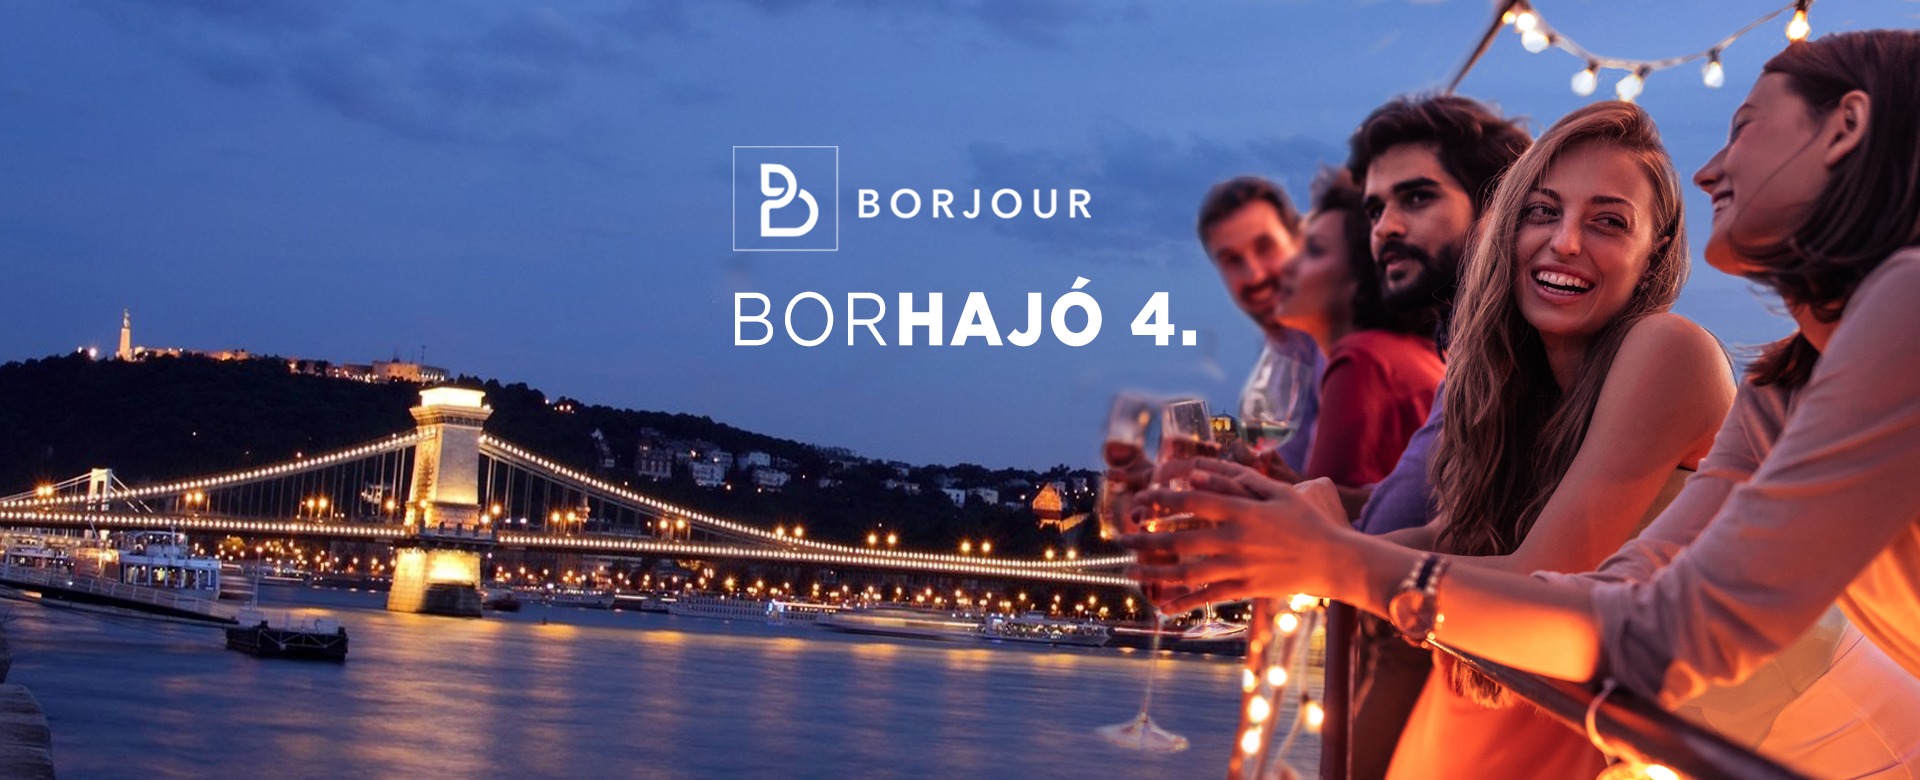 Borjour WIne Event, Zsófia Boat Budapest, 27 July